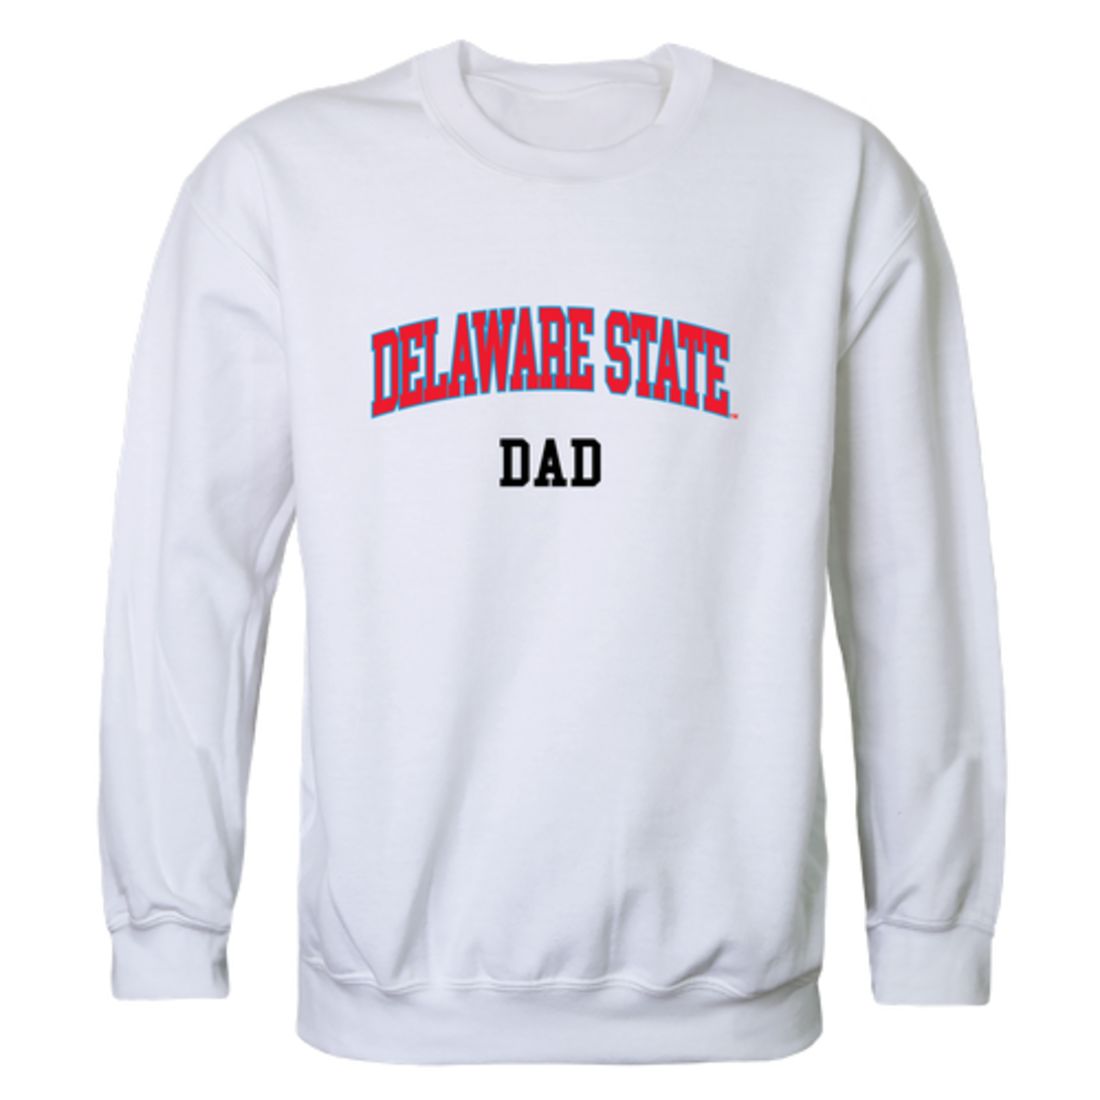 DSU Delaware State University Hornet Dad Fleece Crewneck Pullover Sweatshirt Heather Grey-Campus-Wardrobe